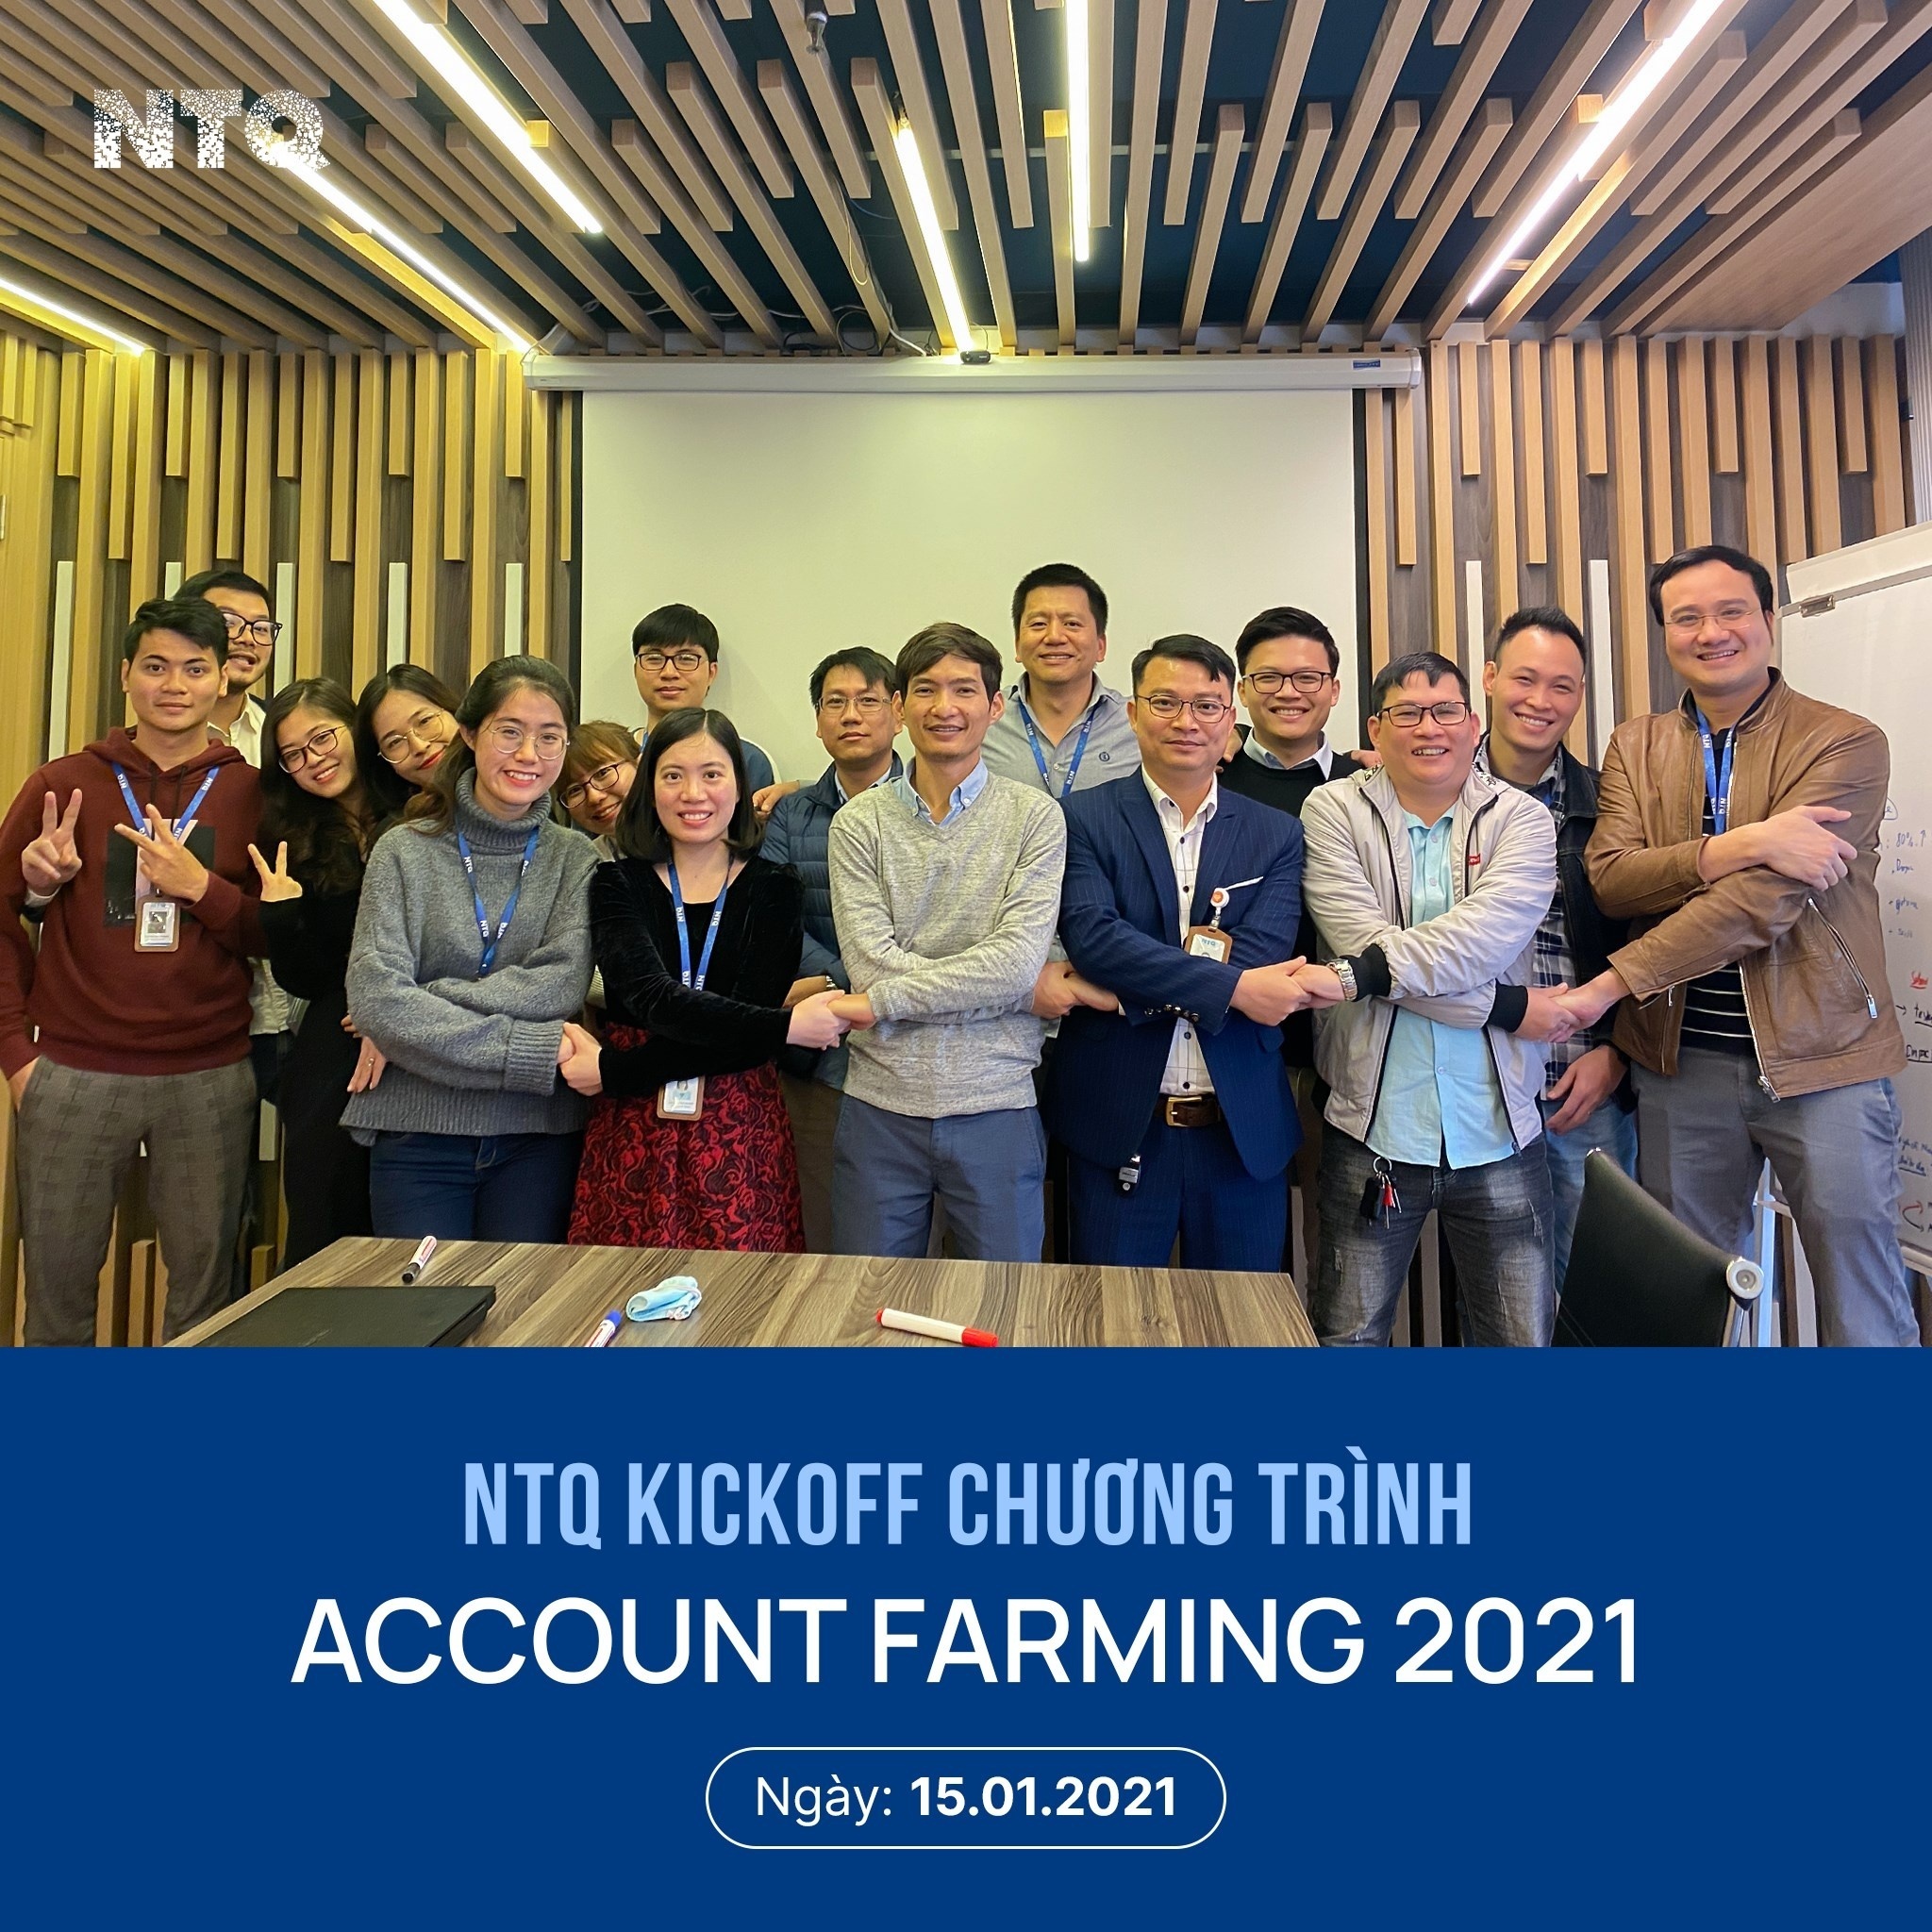 NTQ KickOff Account Farming Program